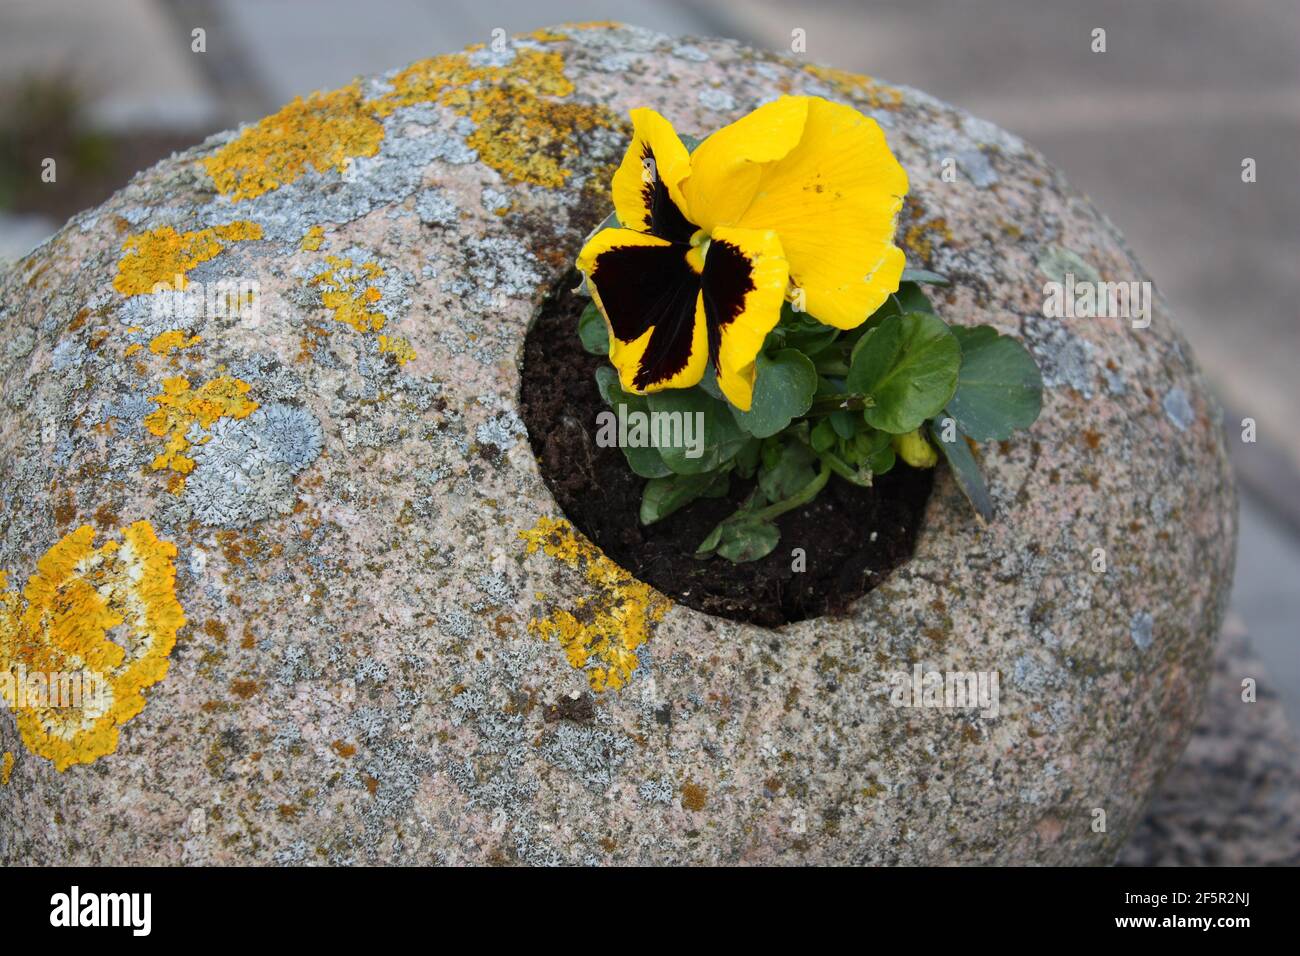 Closeup shot of a yellow anemone growing on a rock Stock Photo